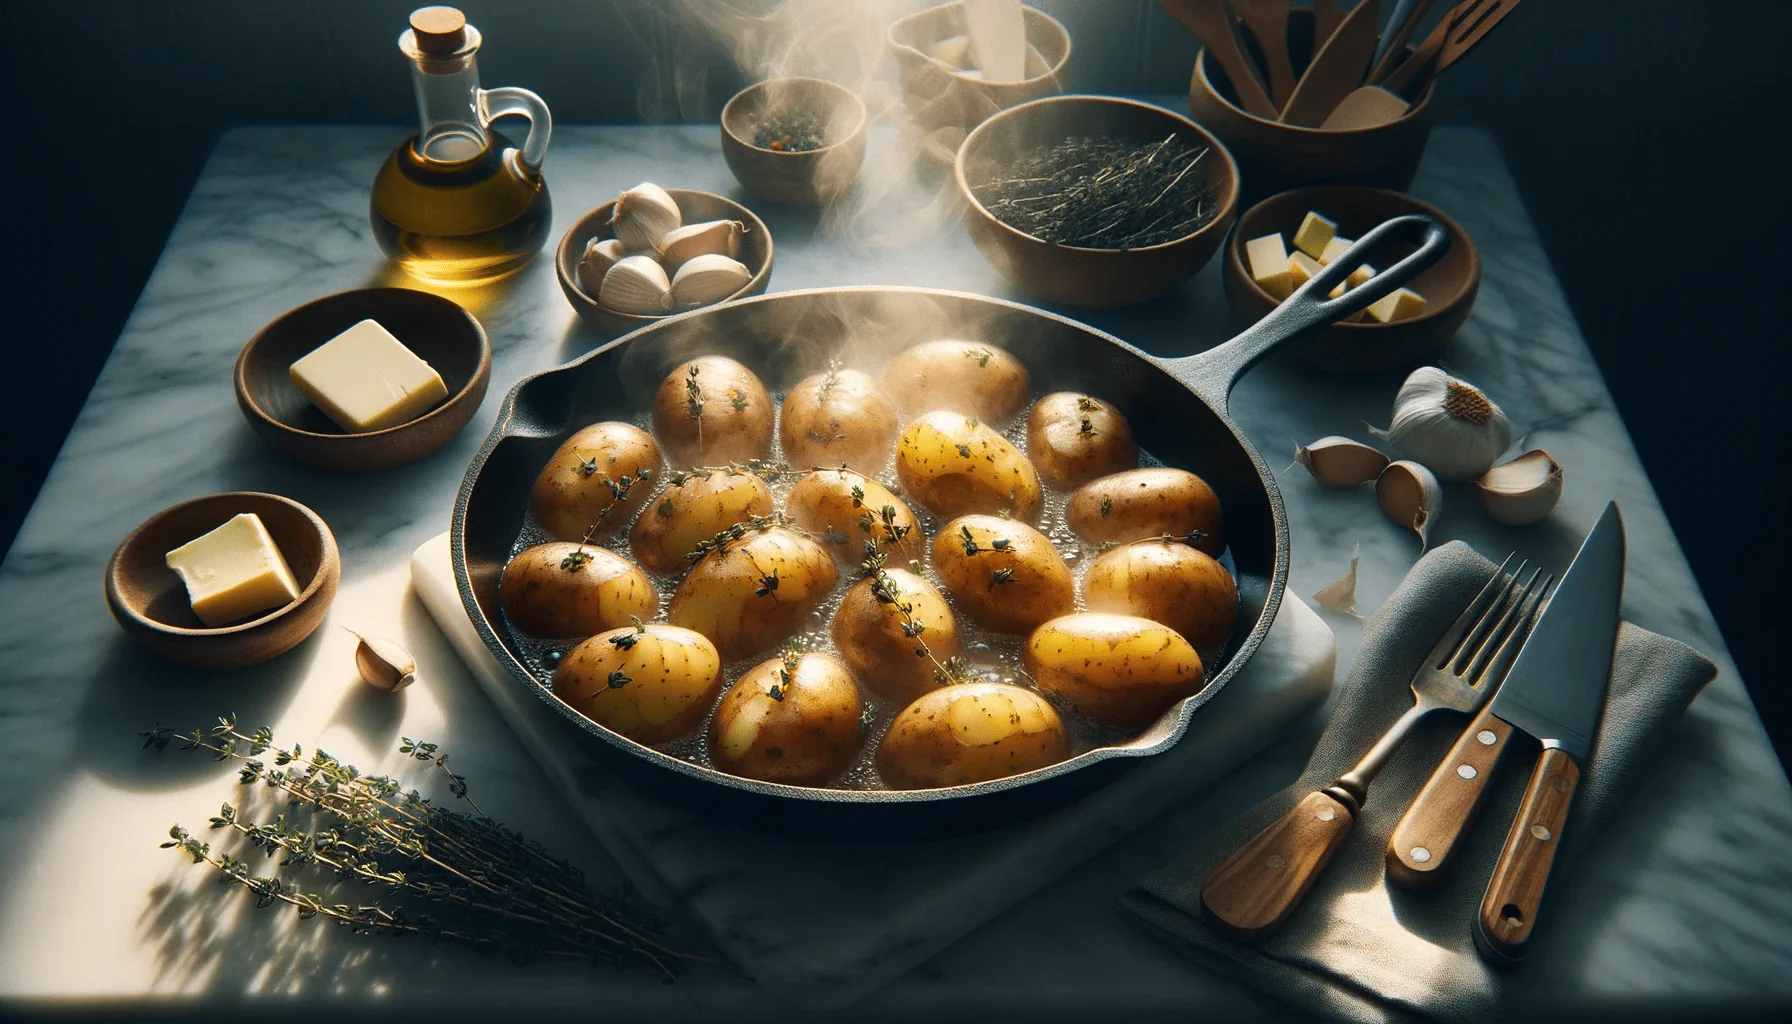 The making of melting potatoes